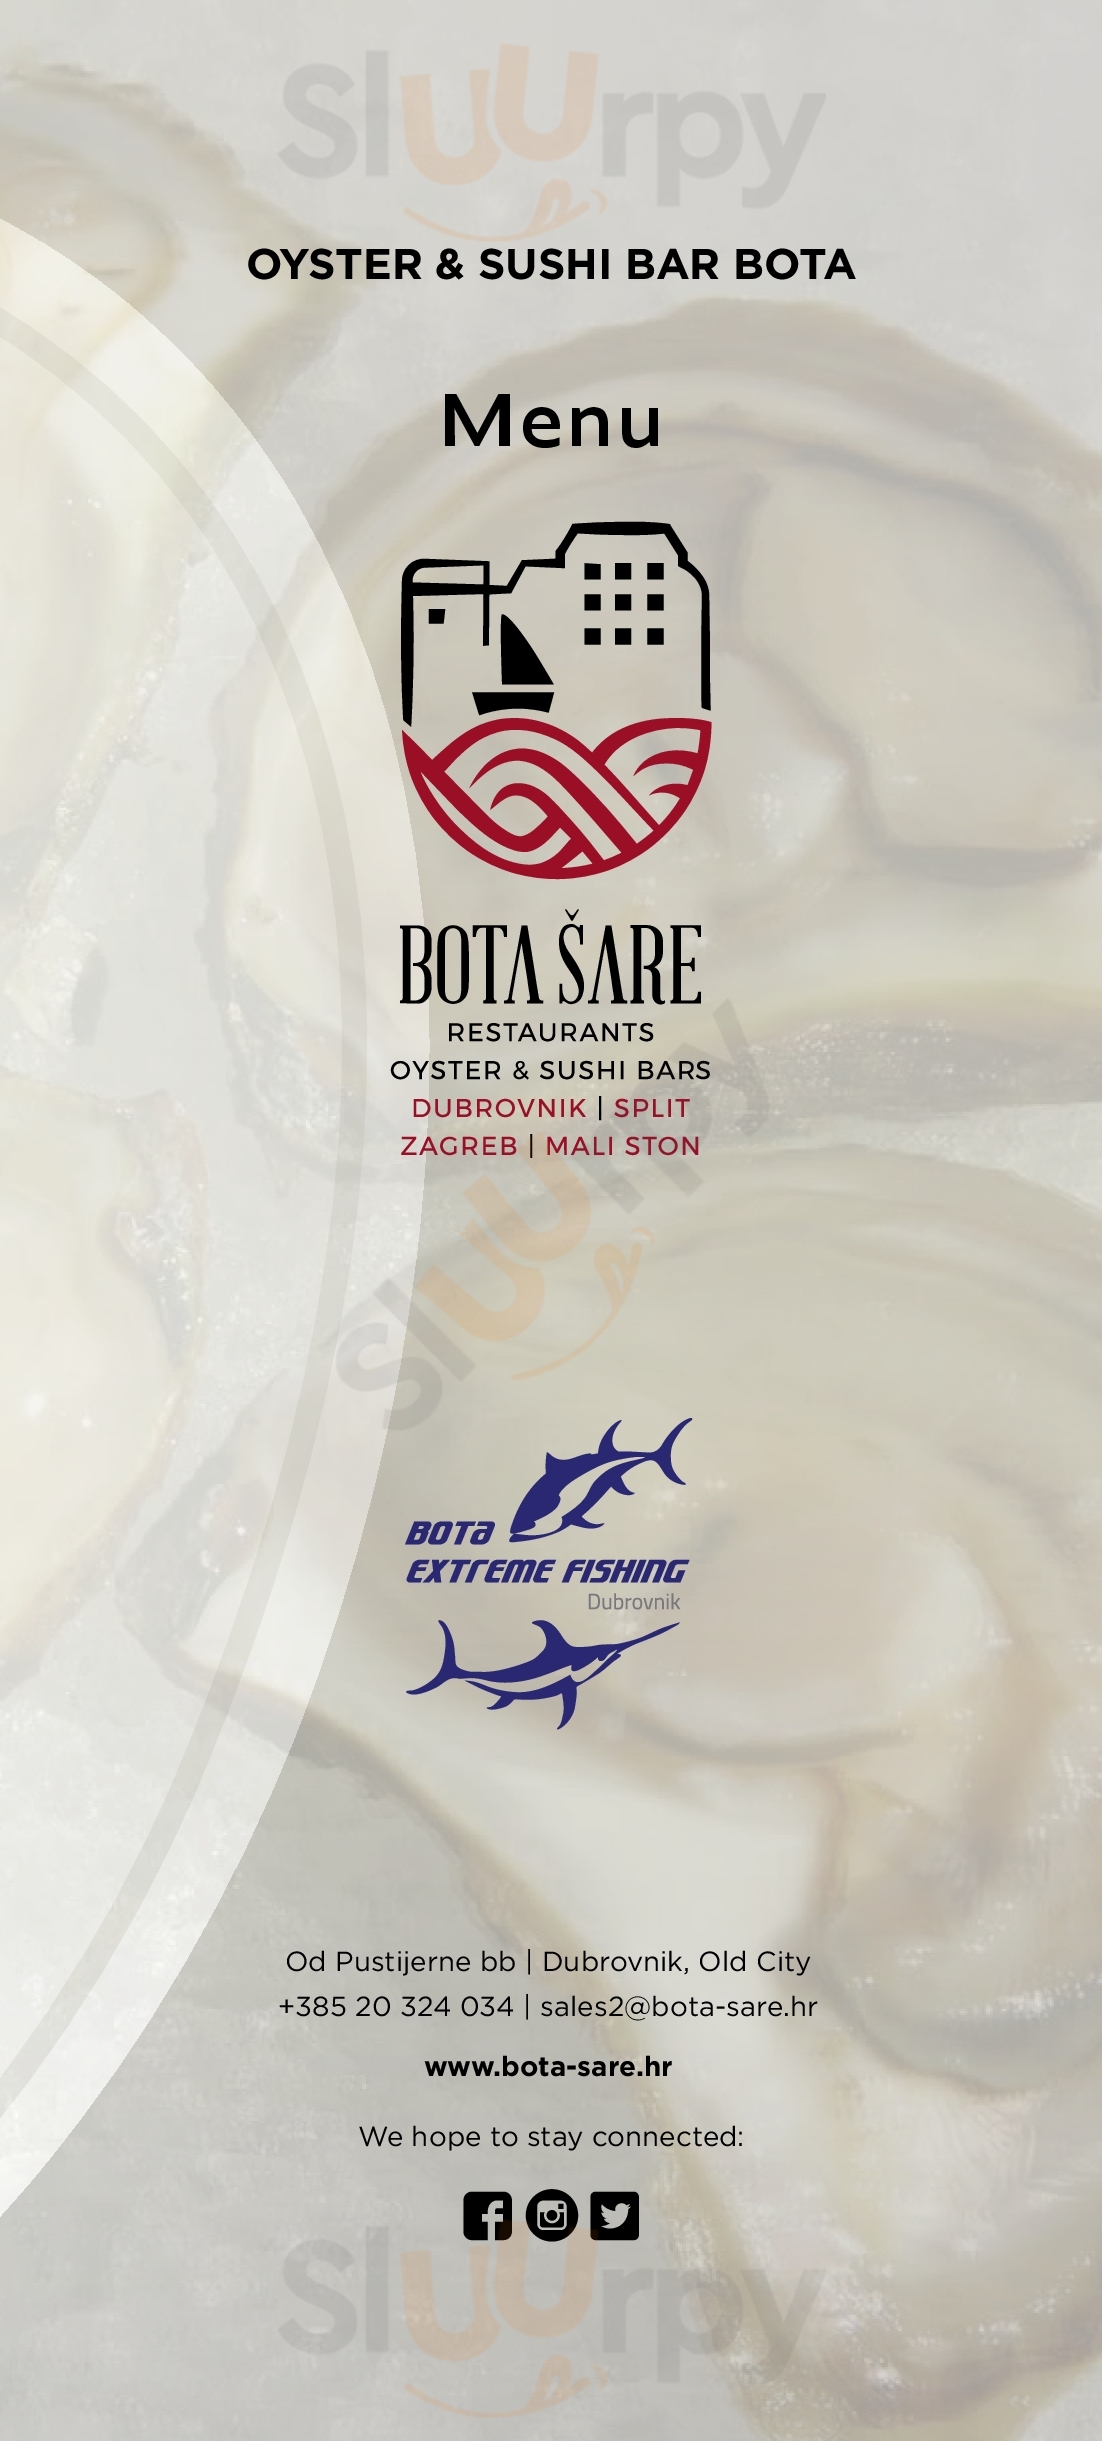 Bota Sare Restaurant & Oyster Bar - Mali Ston Ston Menu - 1